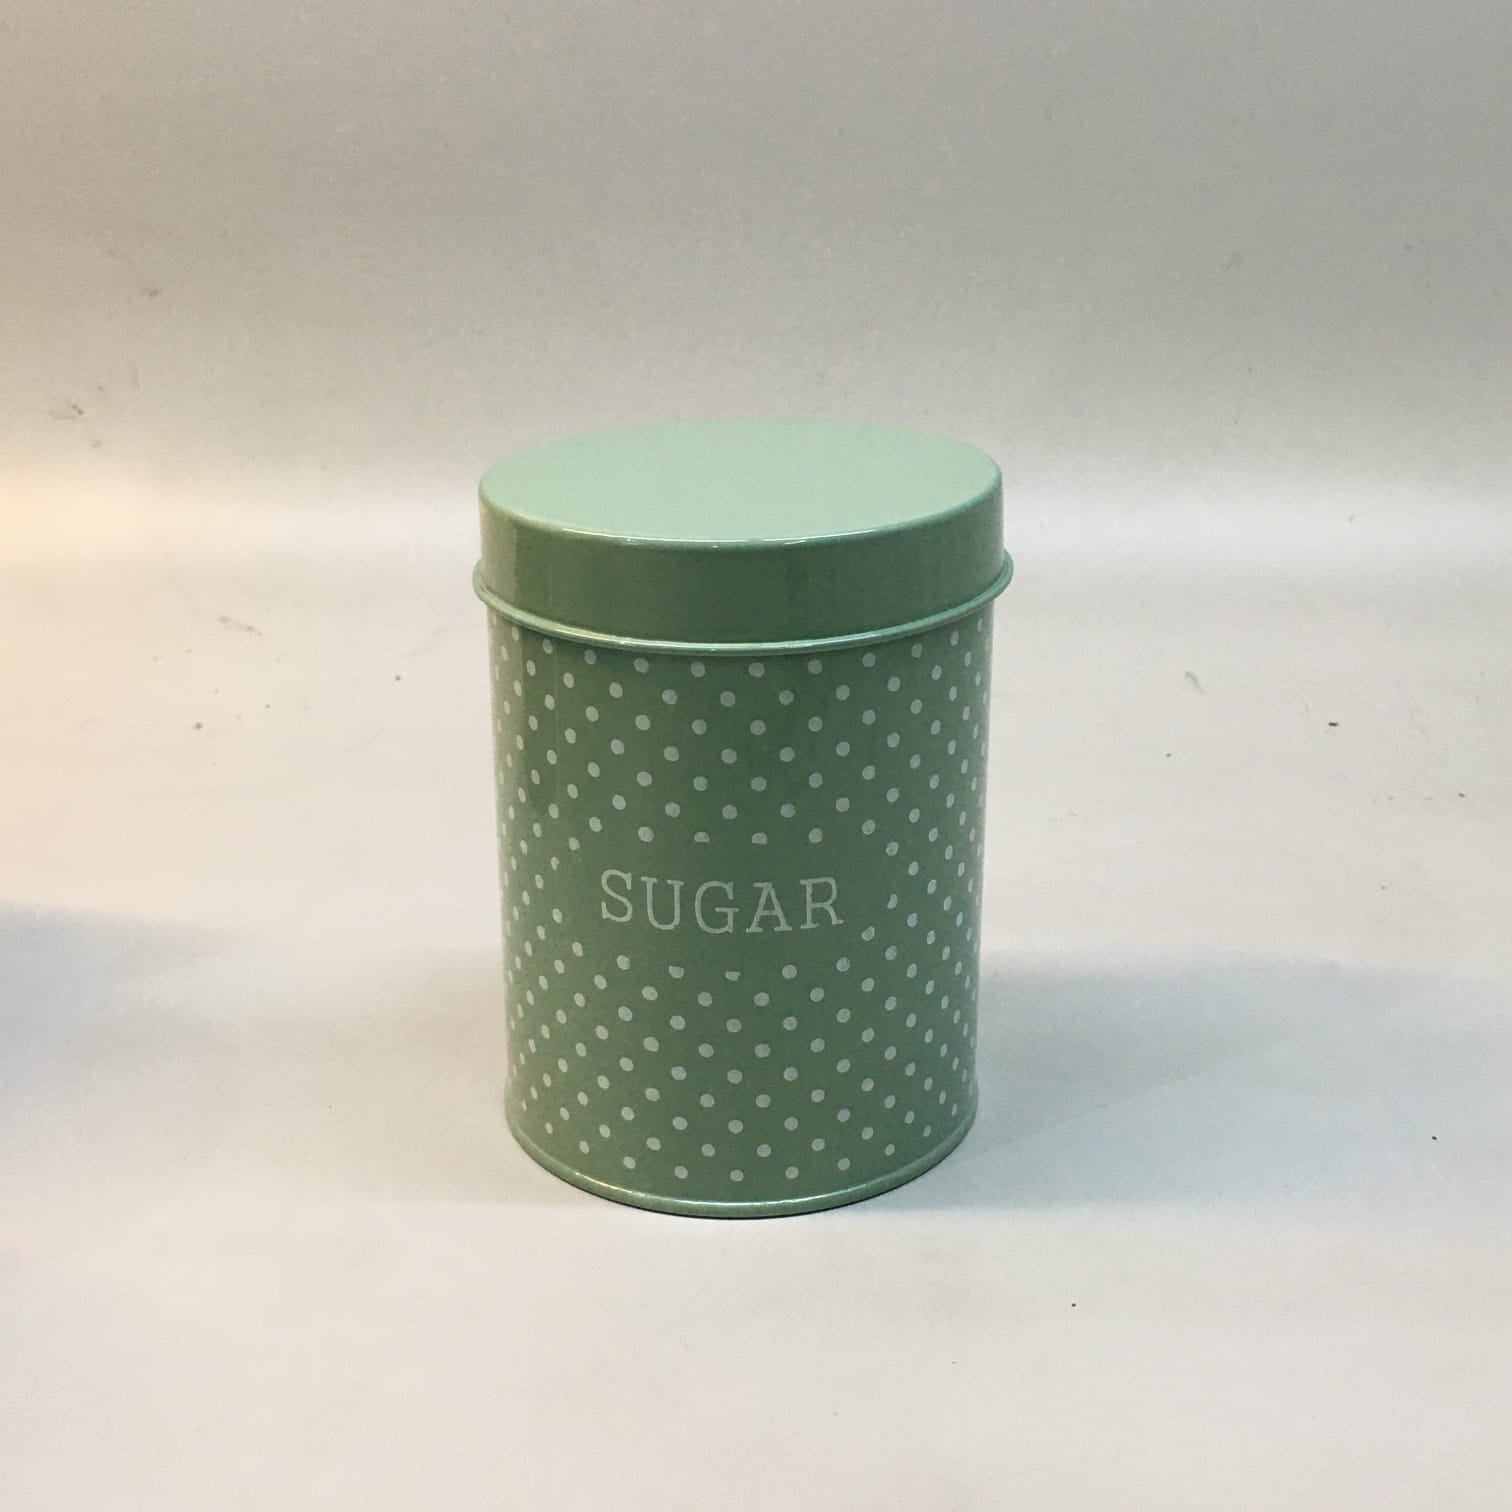 Vintage Tin Sugar Canister Green & White Polka Dot 12x15cm